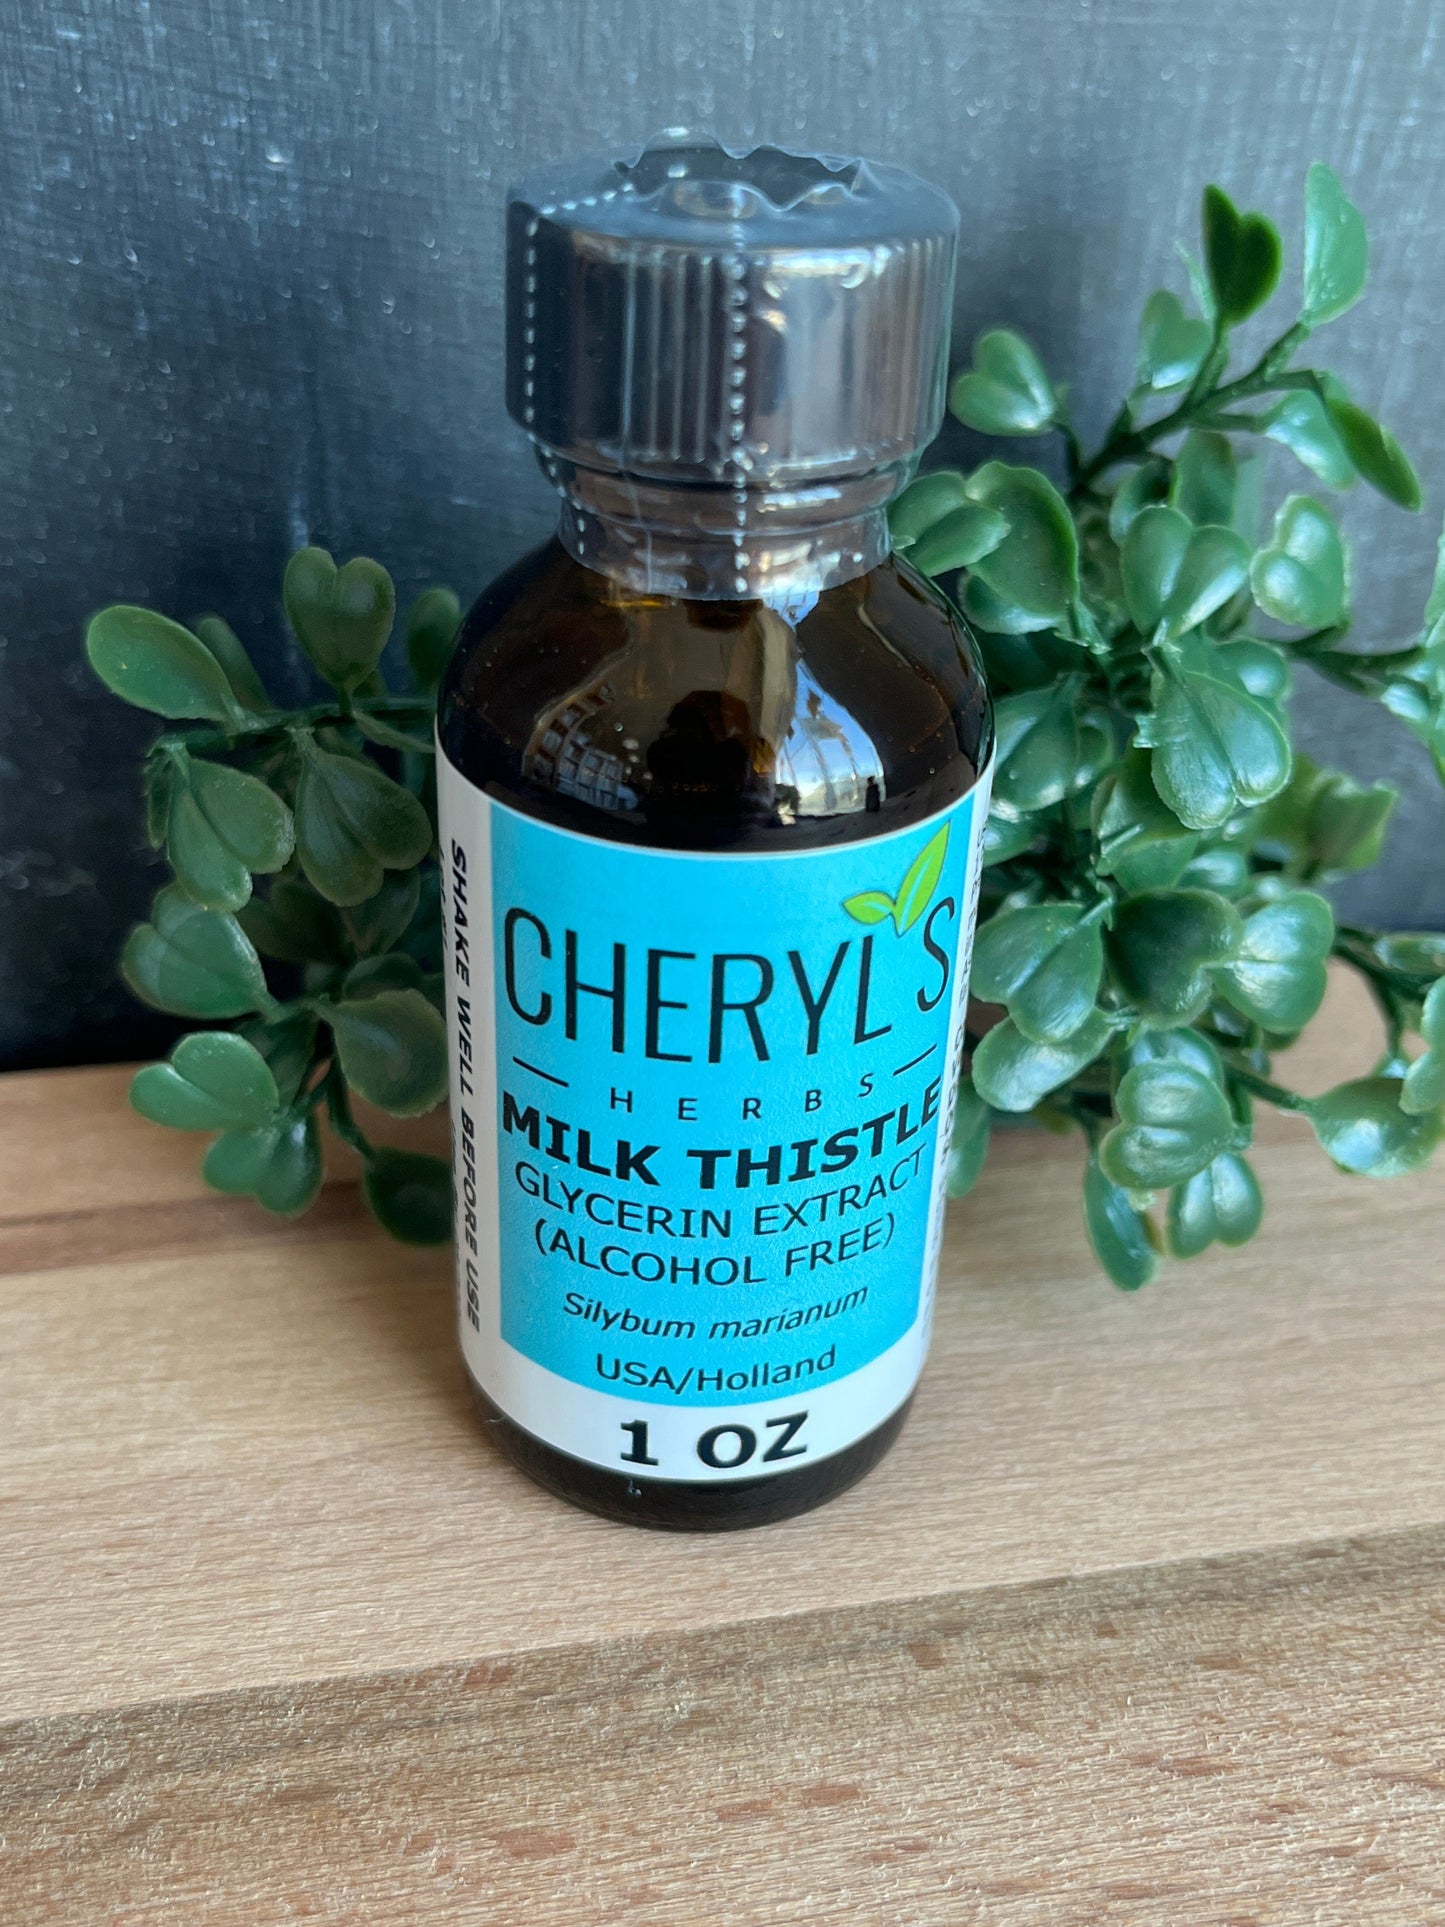 MILK THISTLE GLYCERIN EXTRACT - Cheryls Herbs